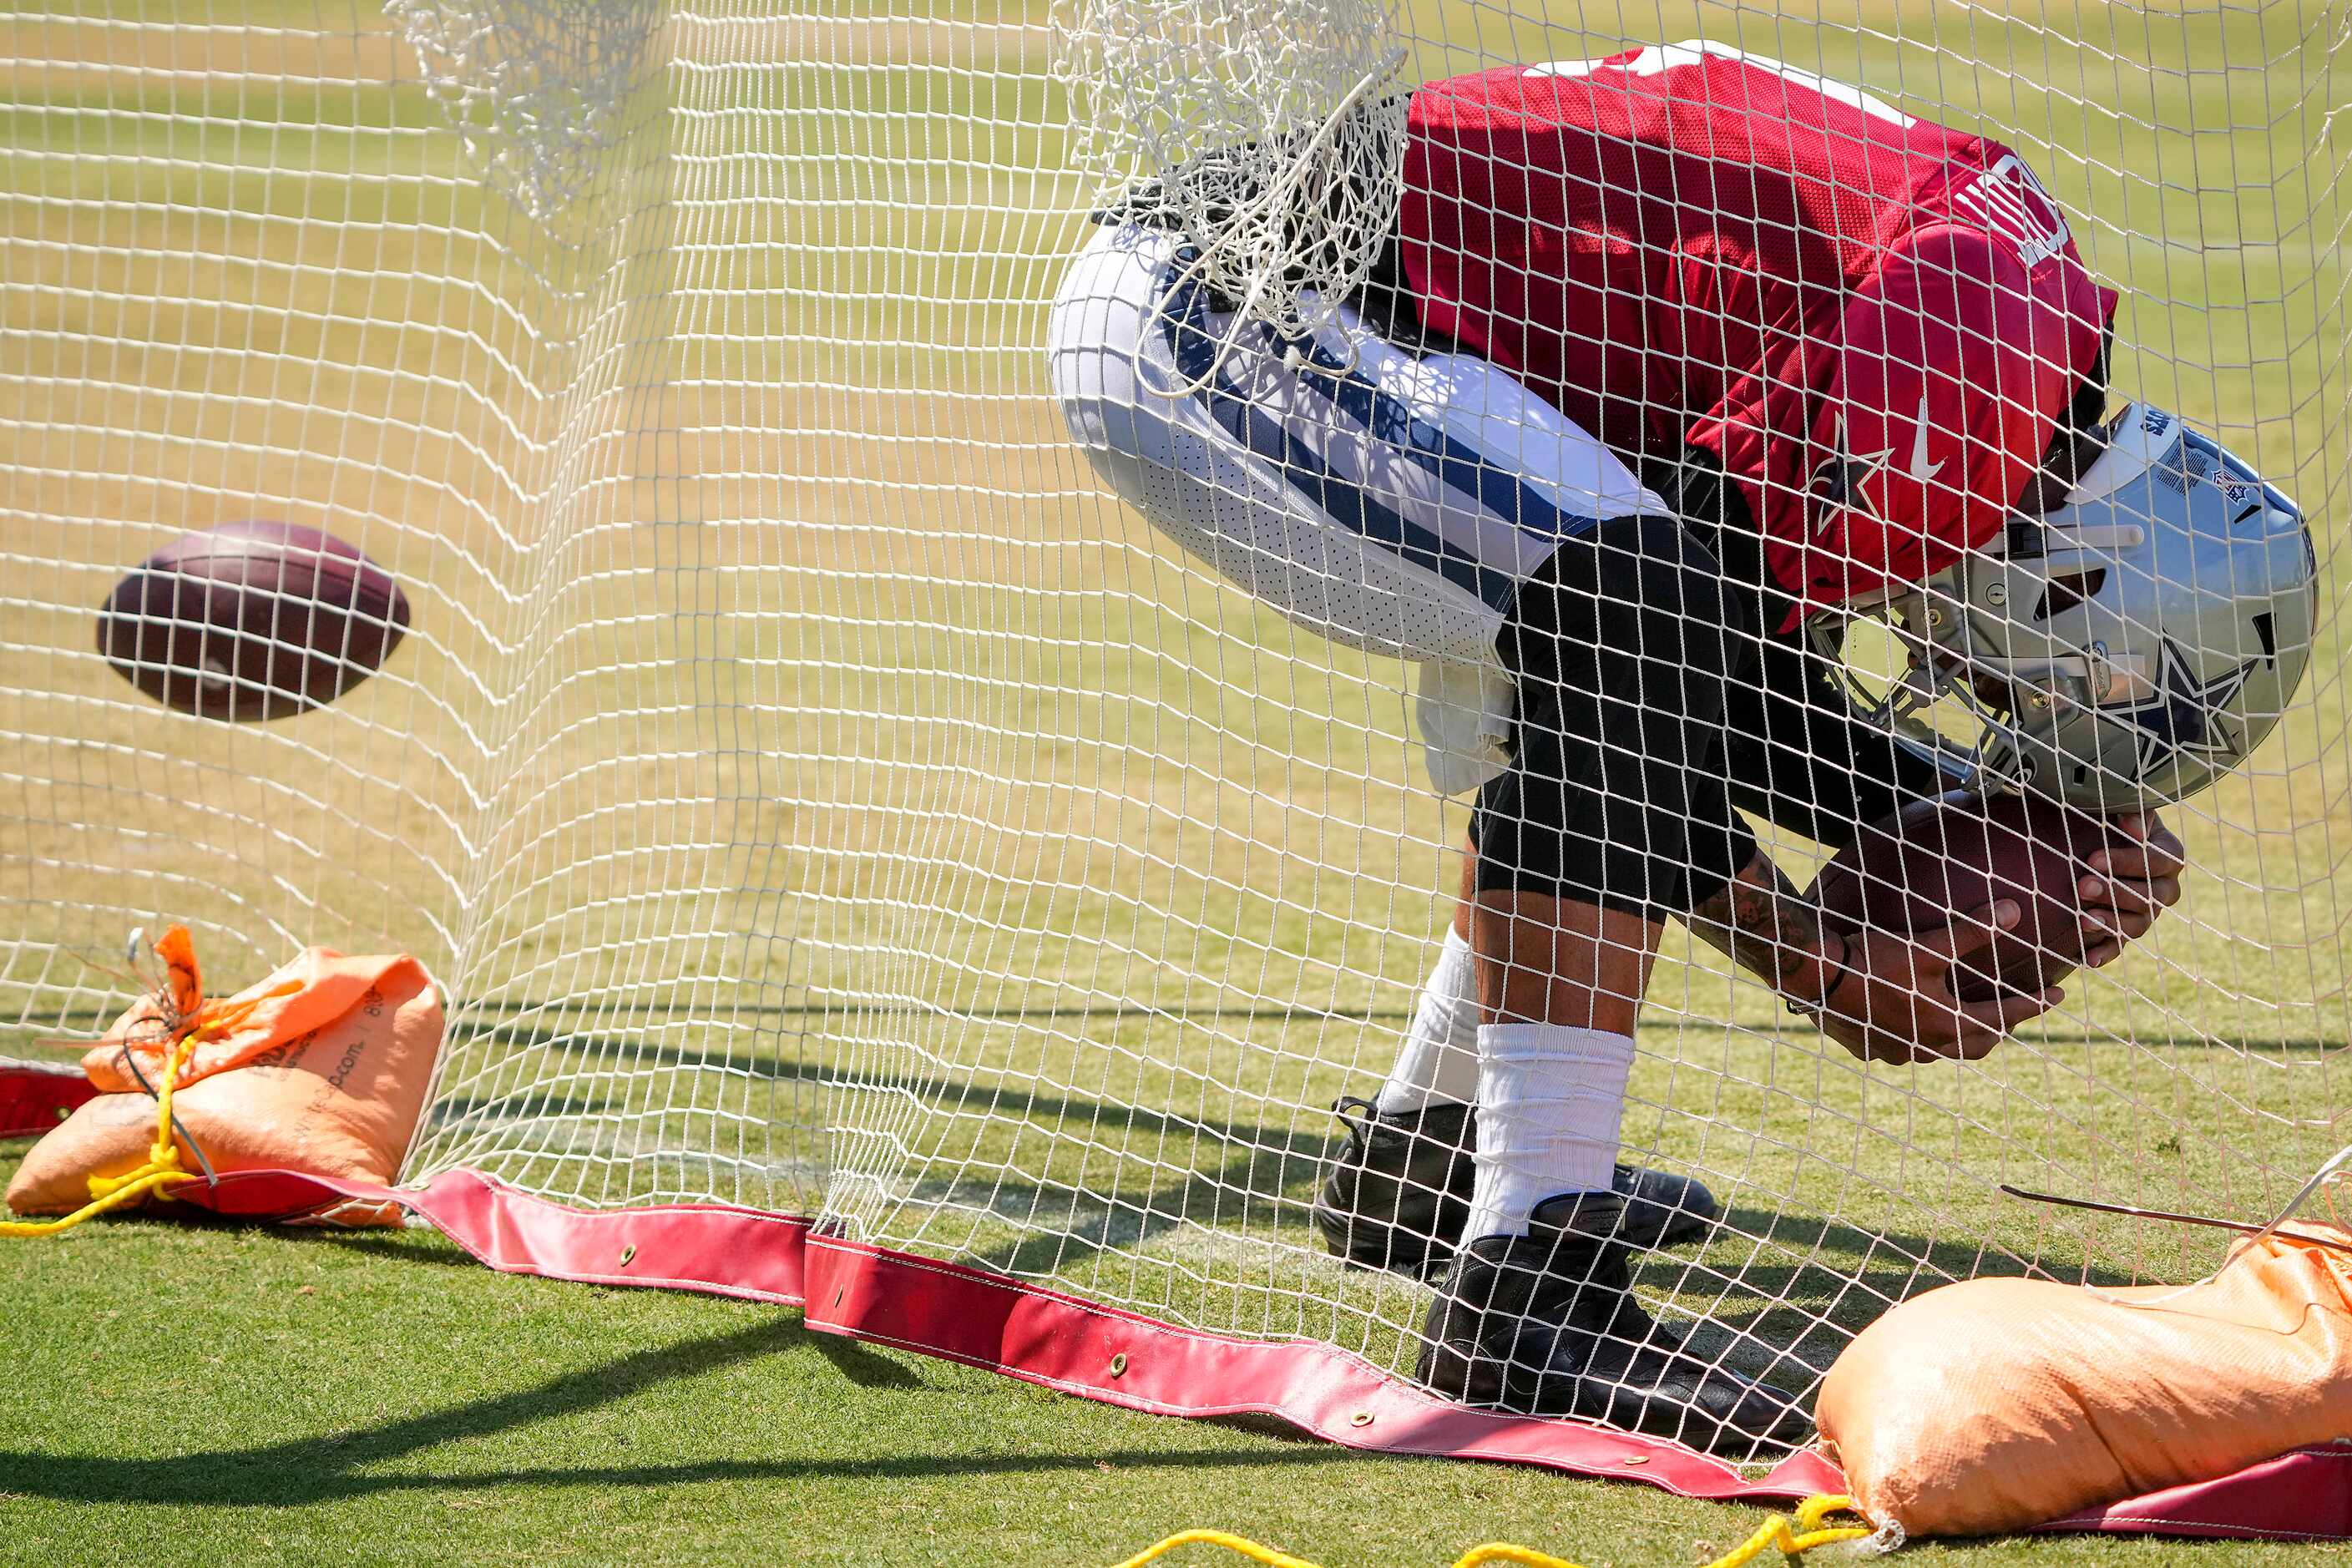 Dallas Cowboys quarterback Dak Prescott ducks under a pass as he retrieves a ball from a net...